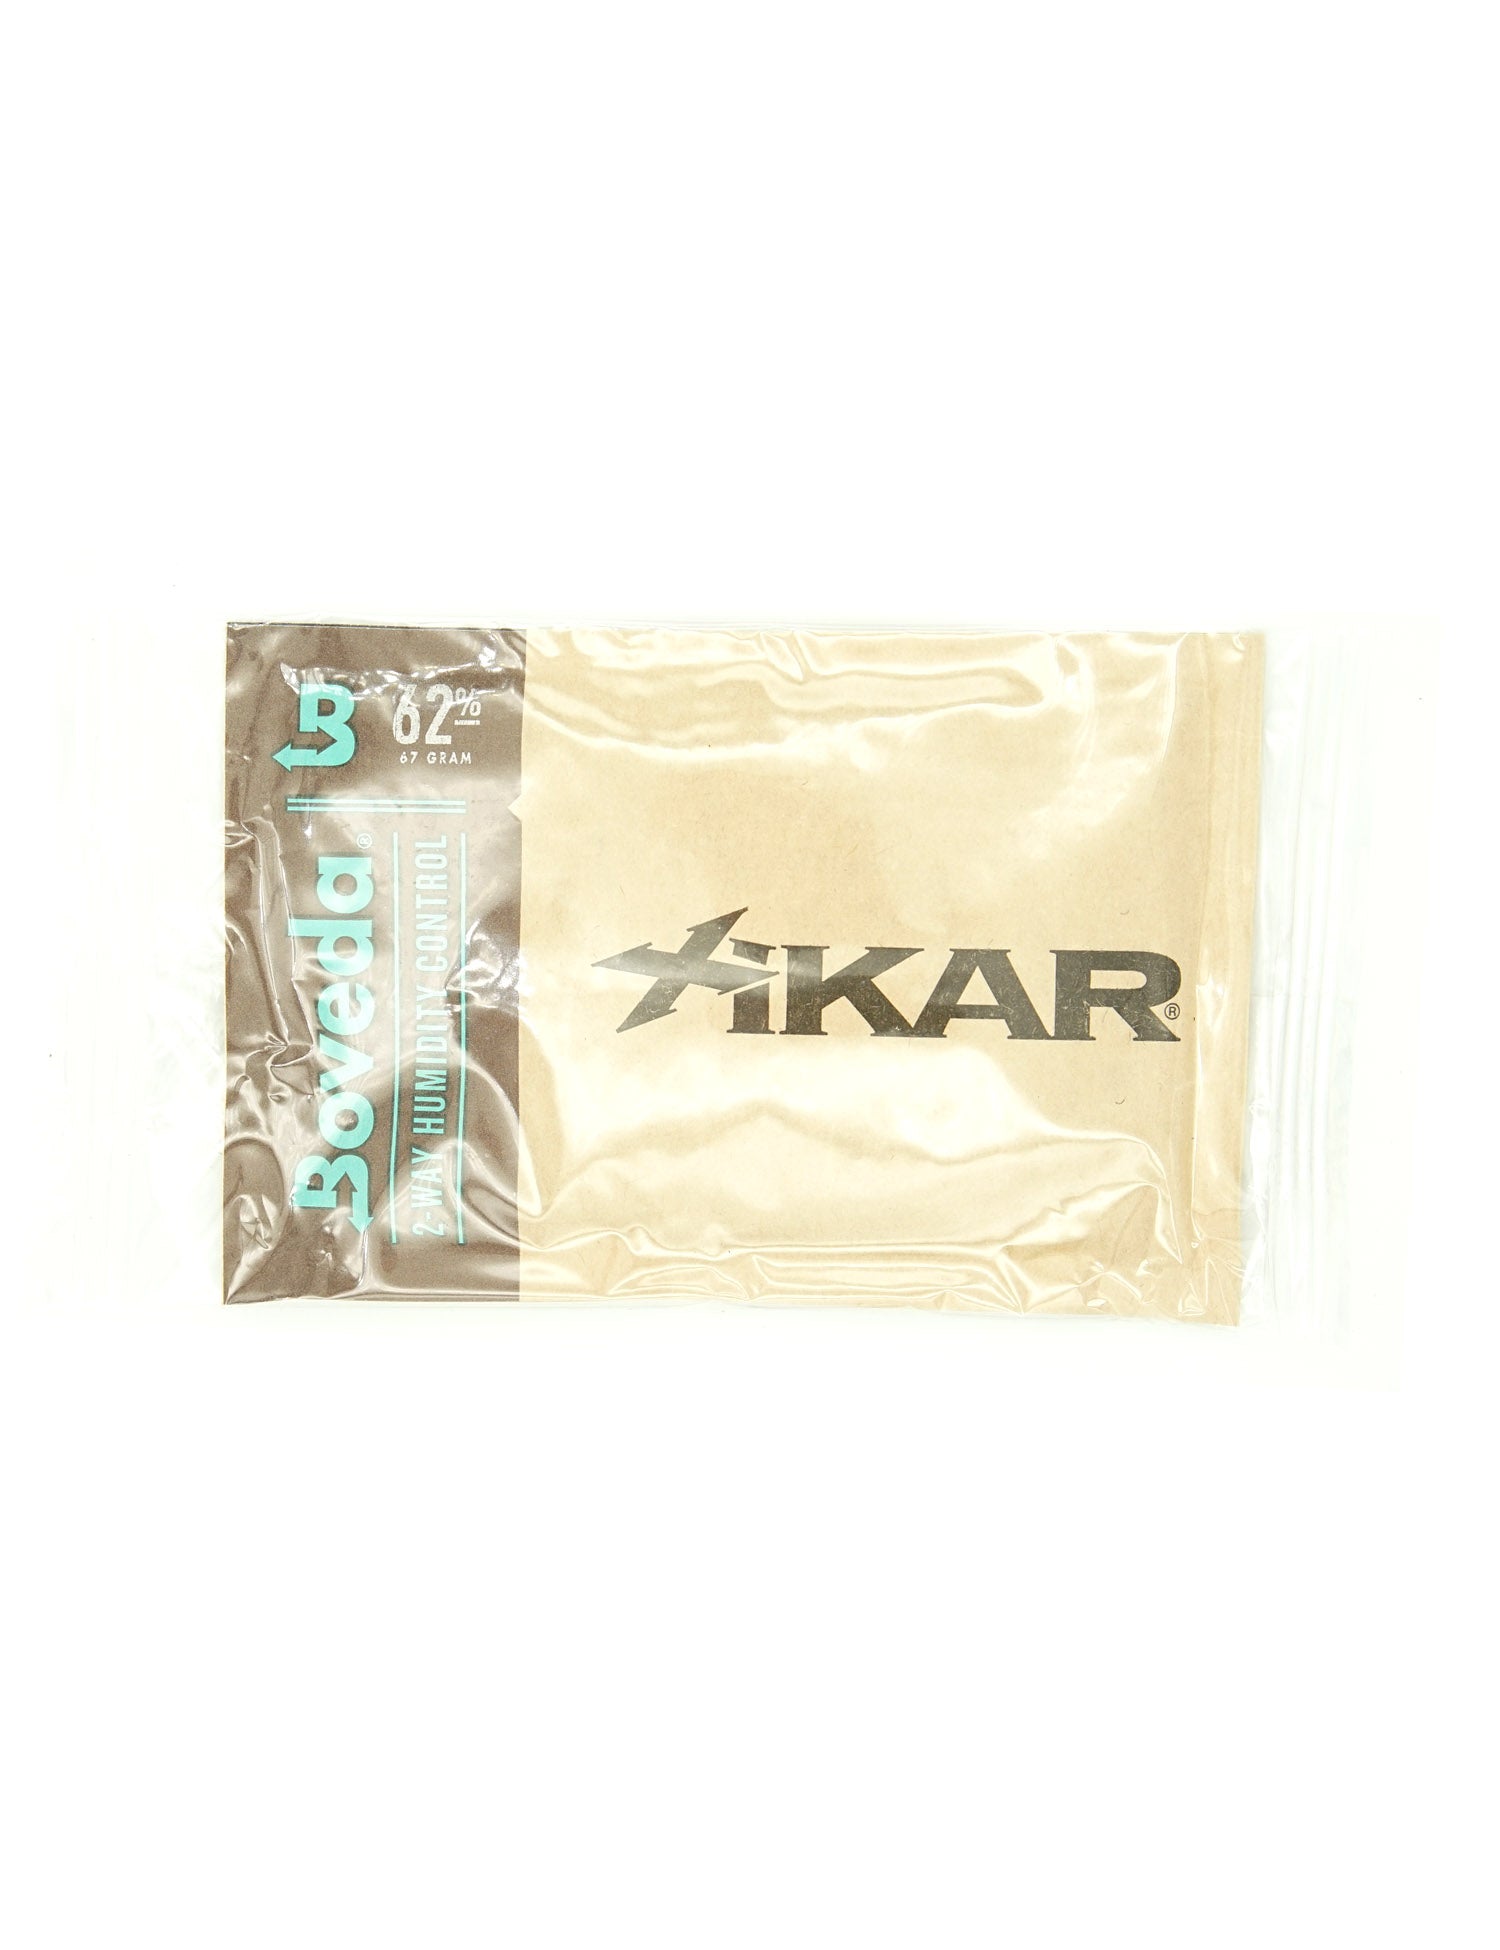 Xikar Boveda Humidity pack 65% 60g